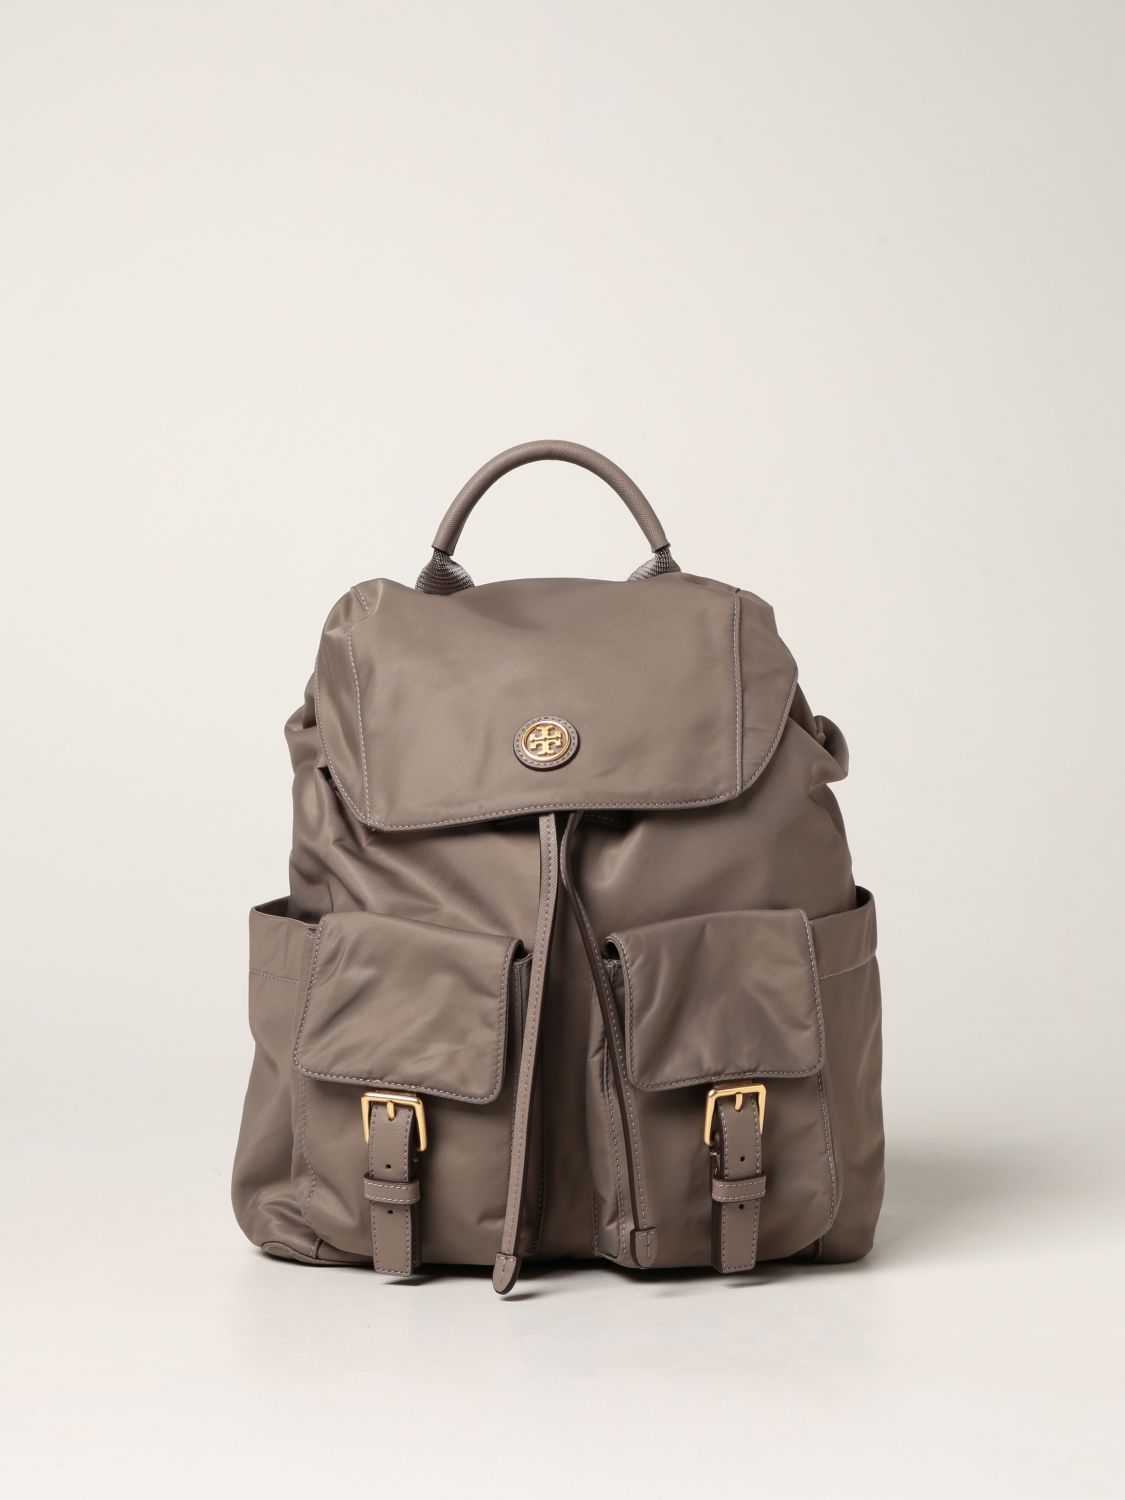 TORY BURCH: nylon - Grey | Burch backpack 85061 online